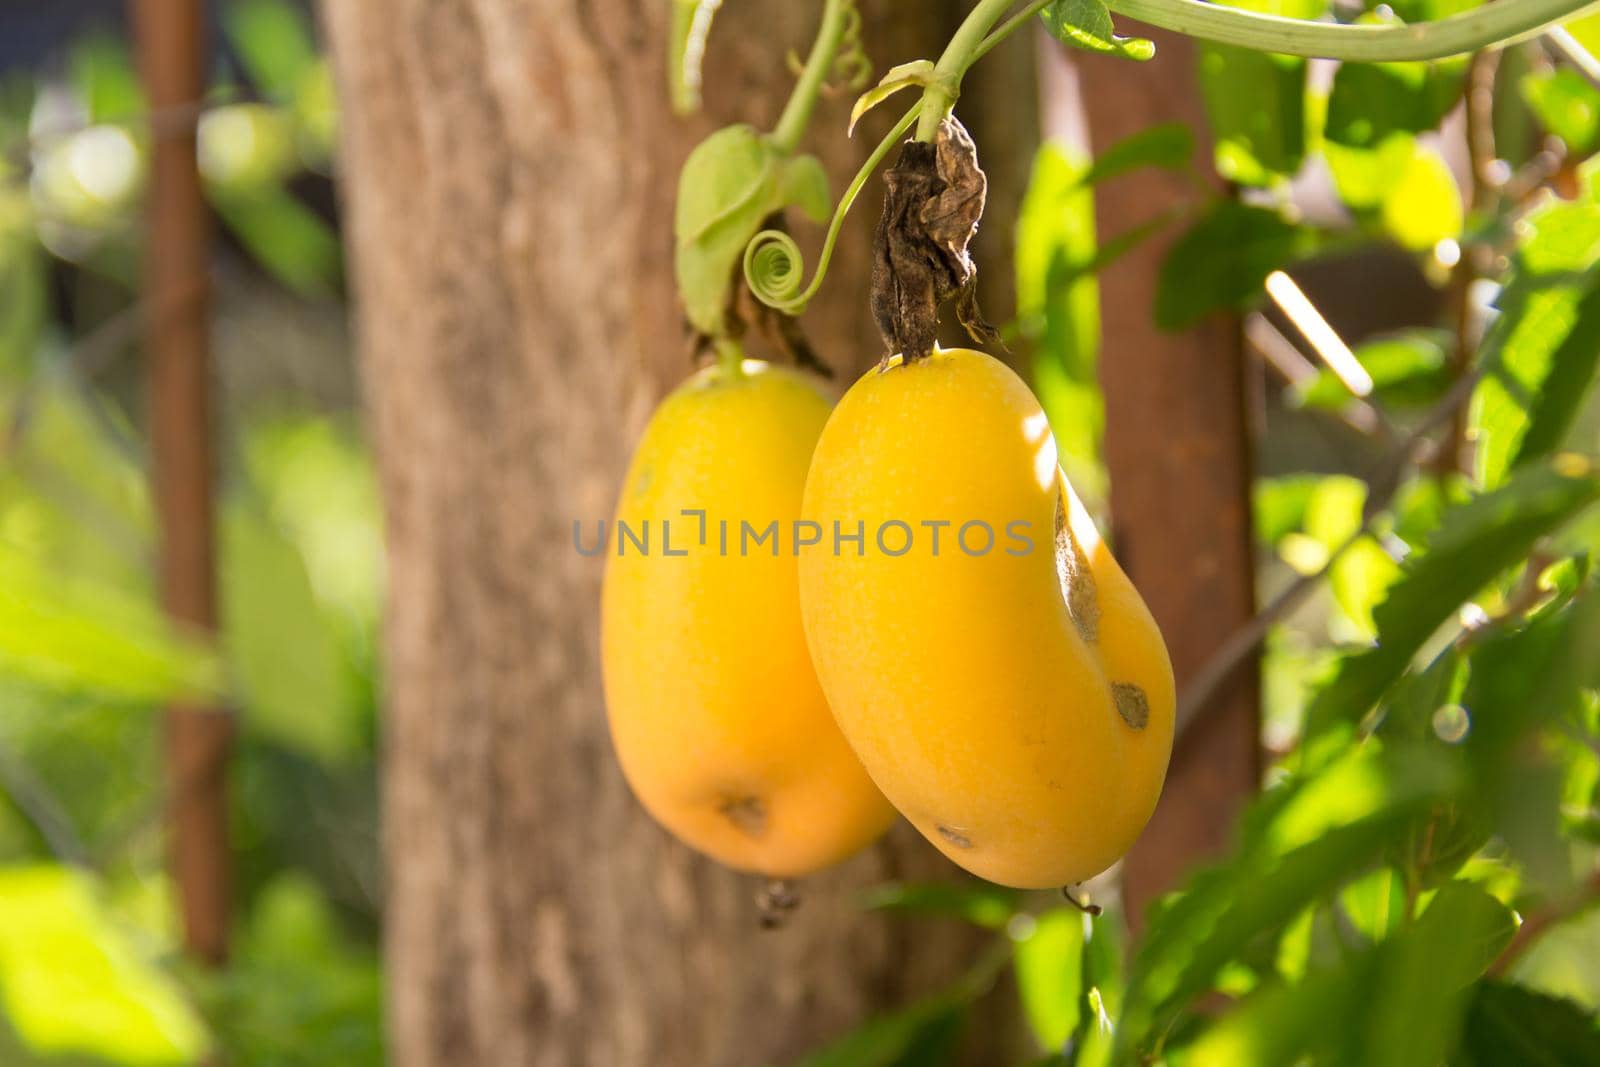 ripe orange fruits of passion fruit or passiflora on wild plant